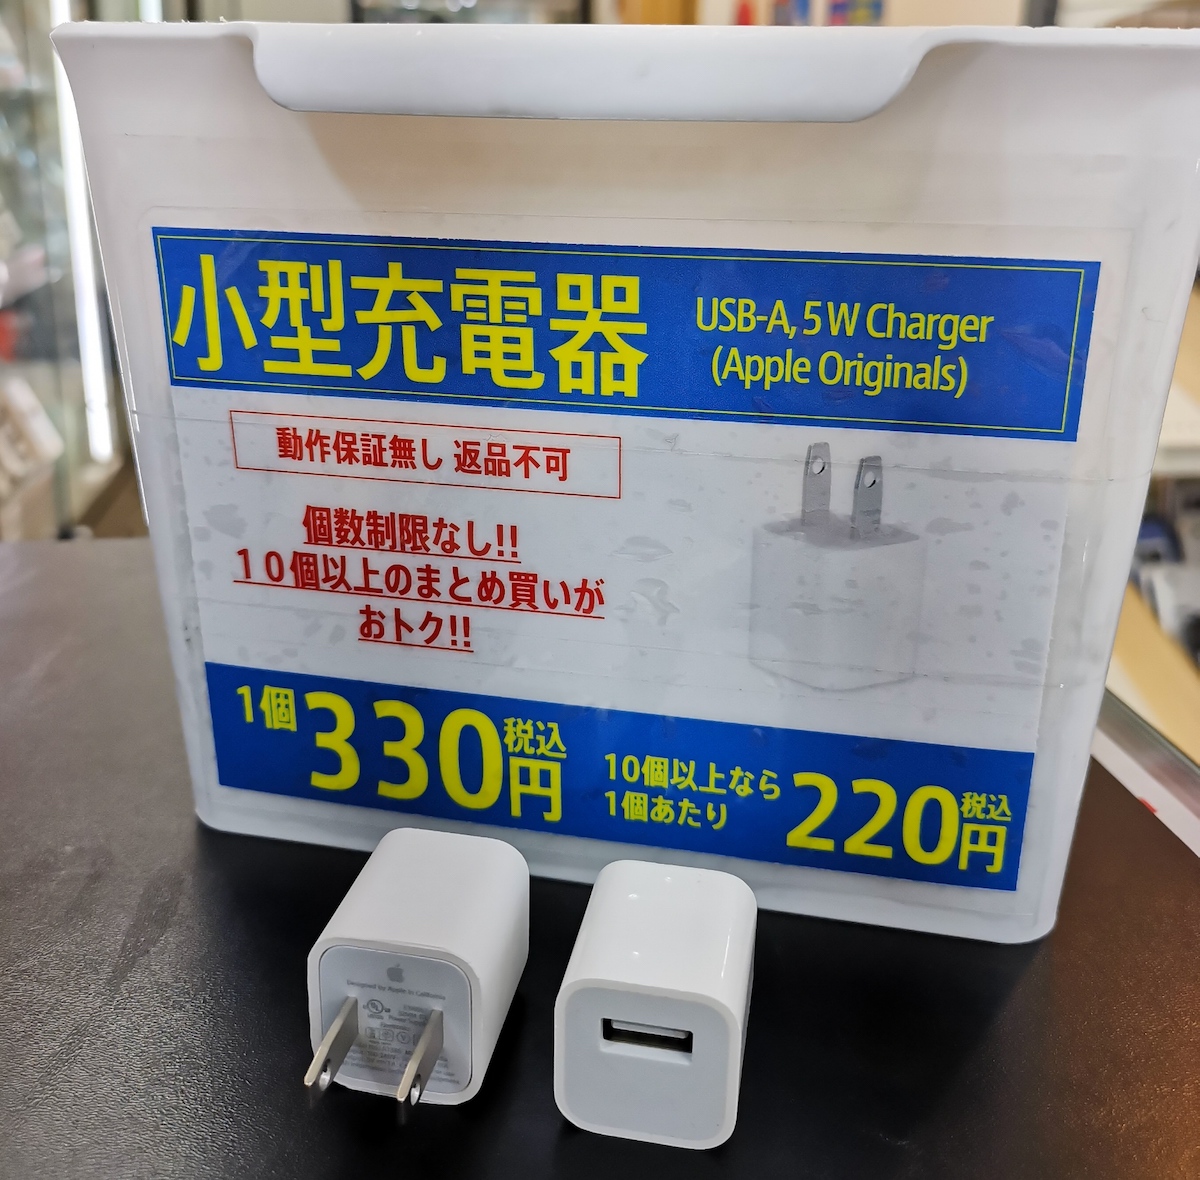 Apple純正USB-A充電器が330円、10個なら2,200円で販売中 - iPhone Mania